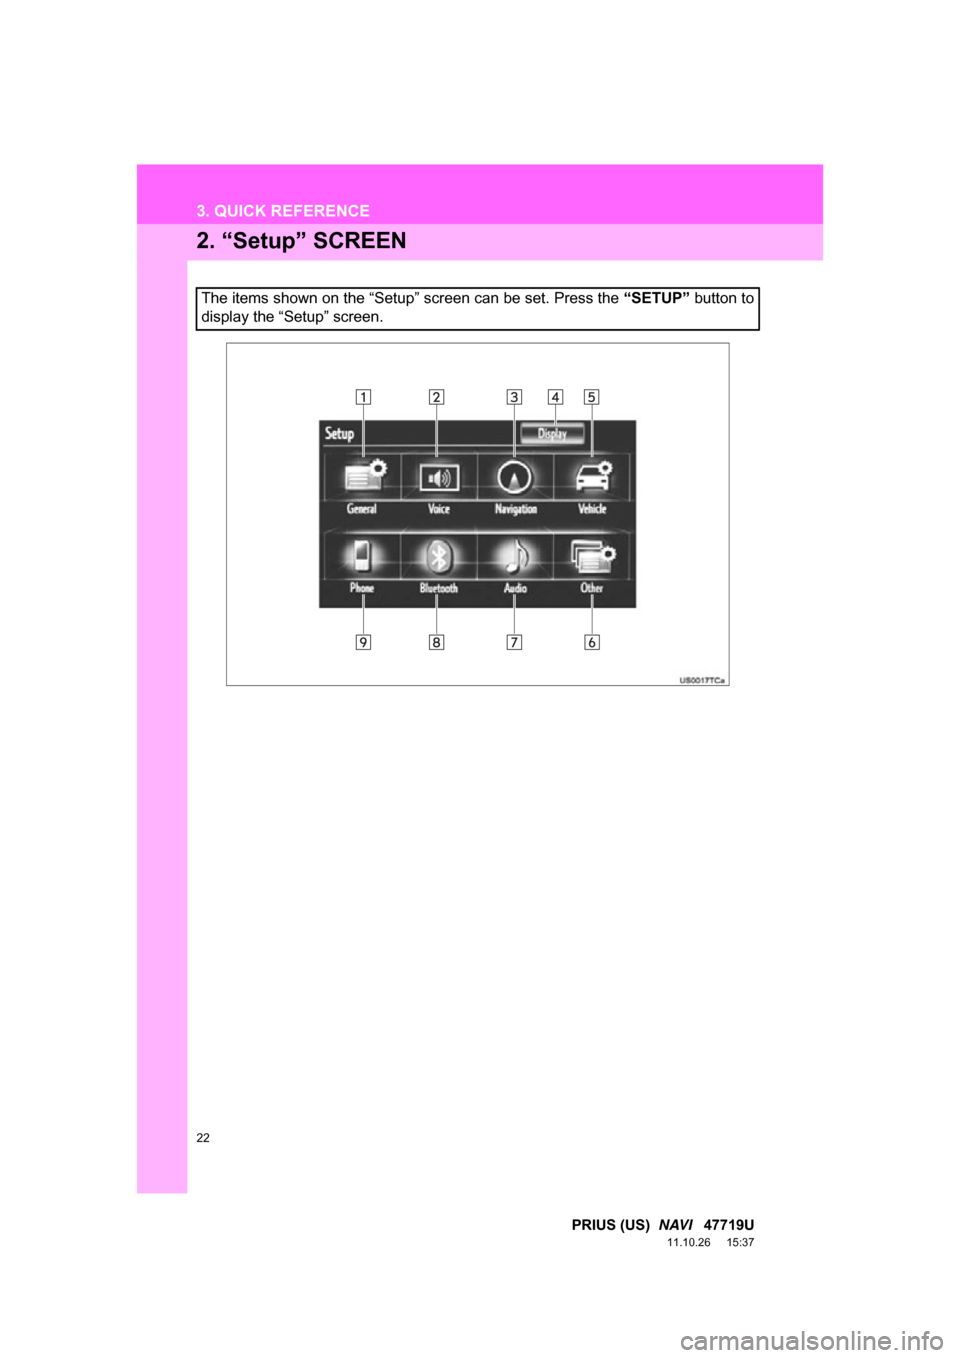 TOYOTA PRIUS 2012 3.G Navigation Manual 22
3. QUICK REFERENCE
PRIUS (US)  NAVI   47719U
11.10.26     15:37
2. “Setup” SCREEN
The items shown on the “Setup” screen can be set. Press the  “SETUP” button to
display the “Setup” 